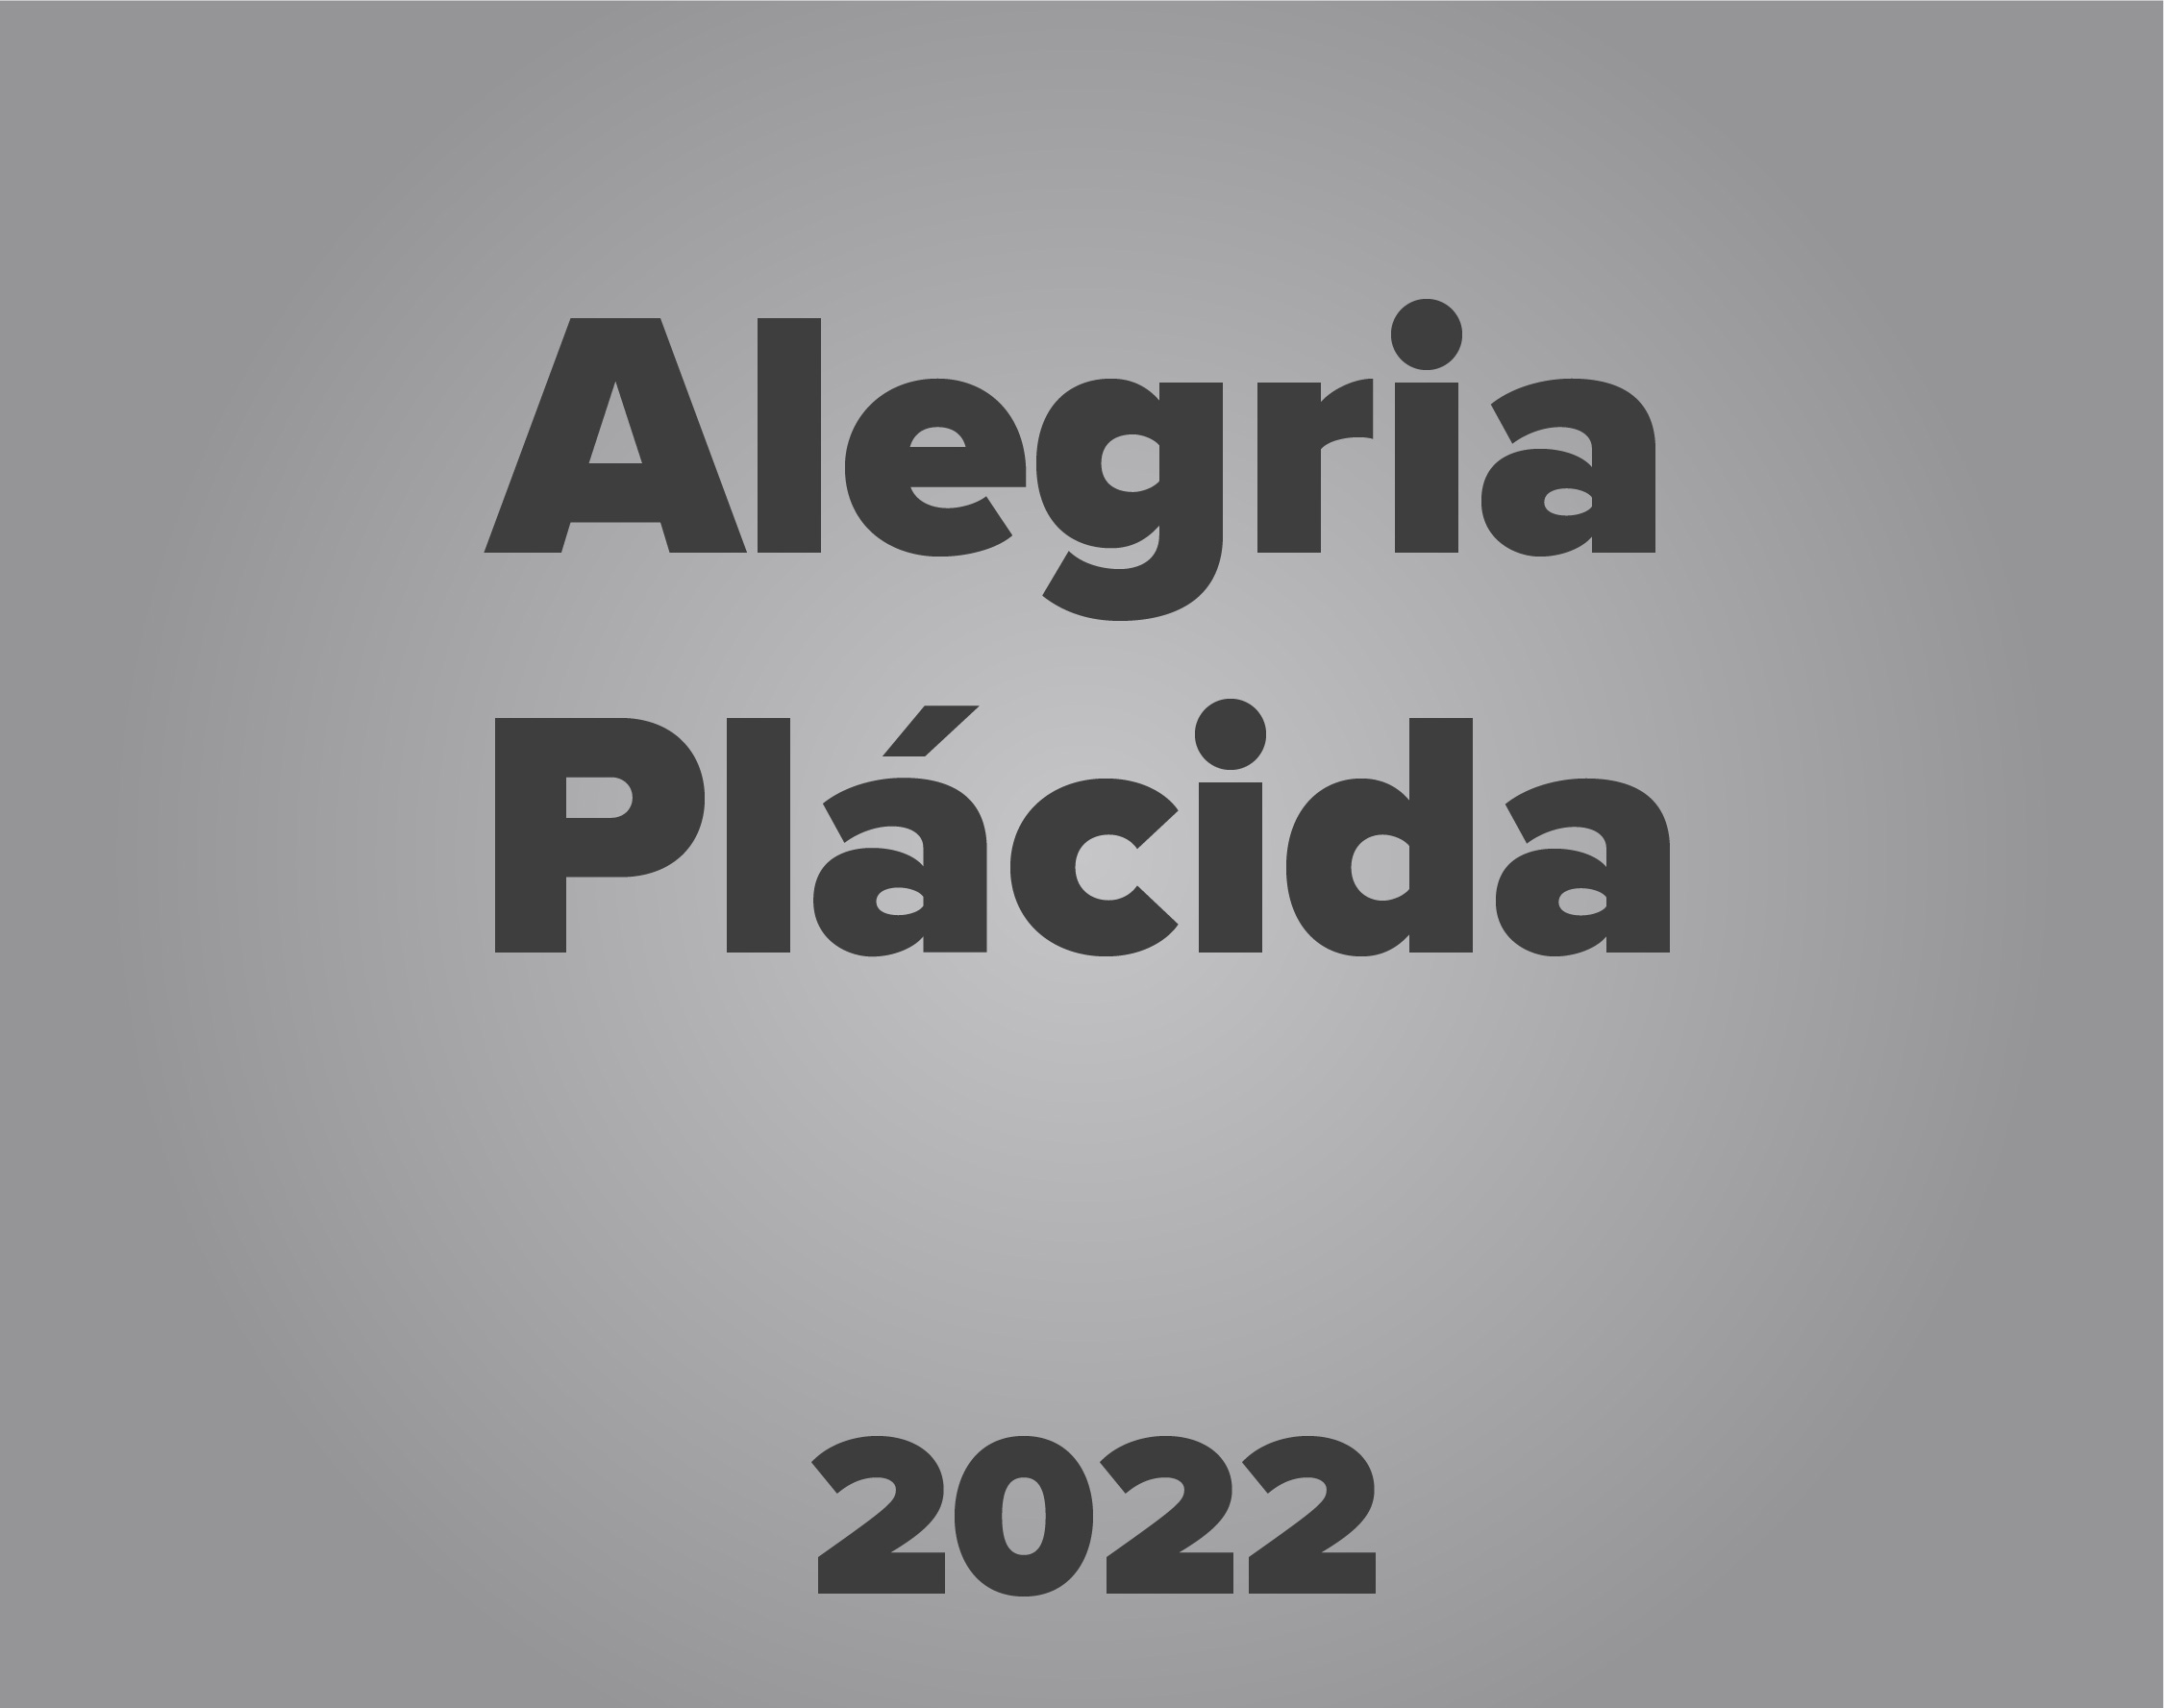 2022 – Alegria Plácida